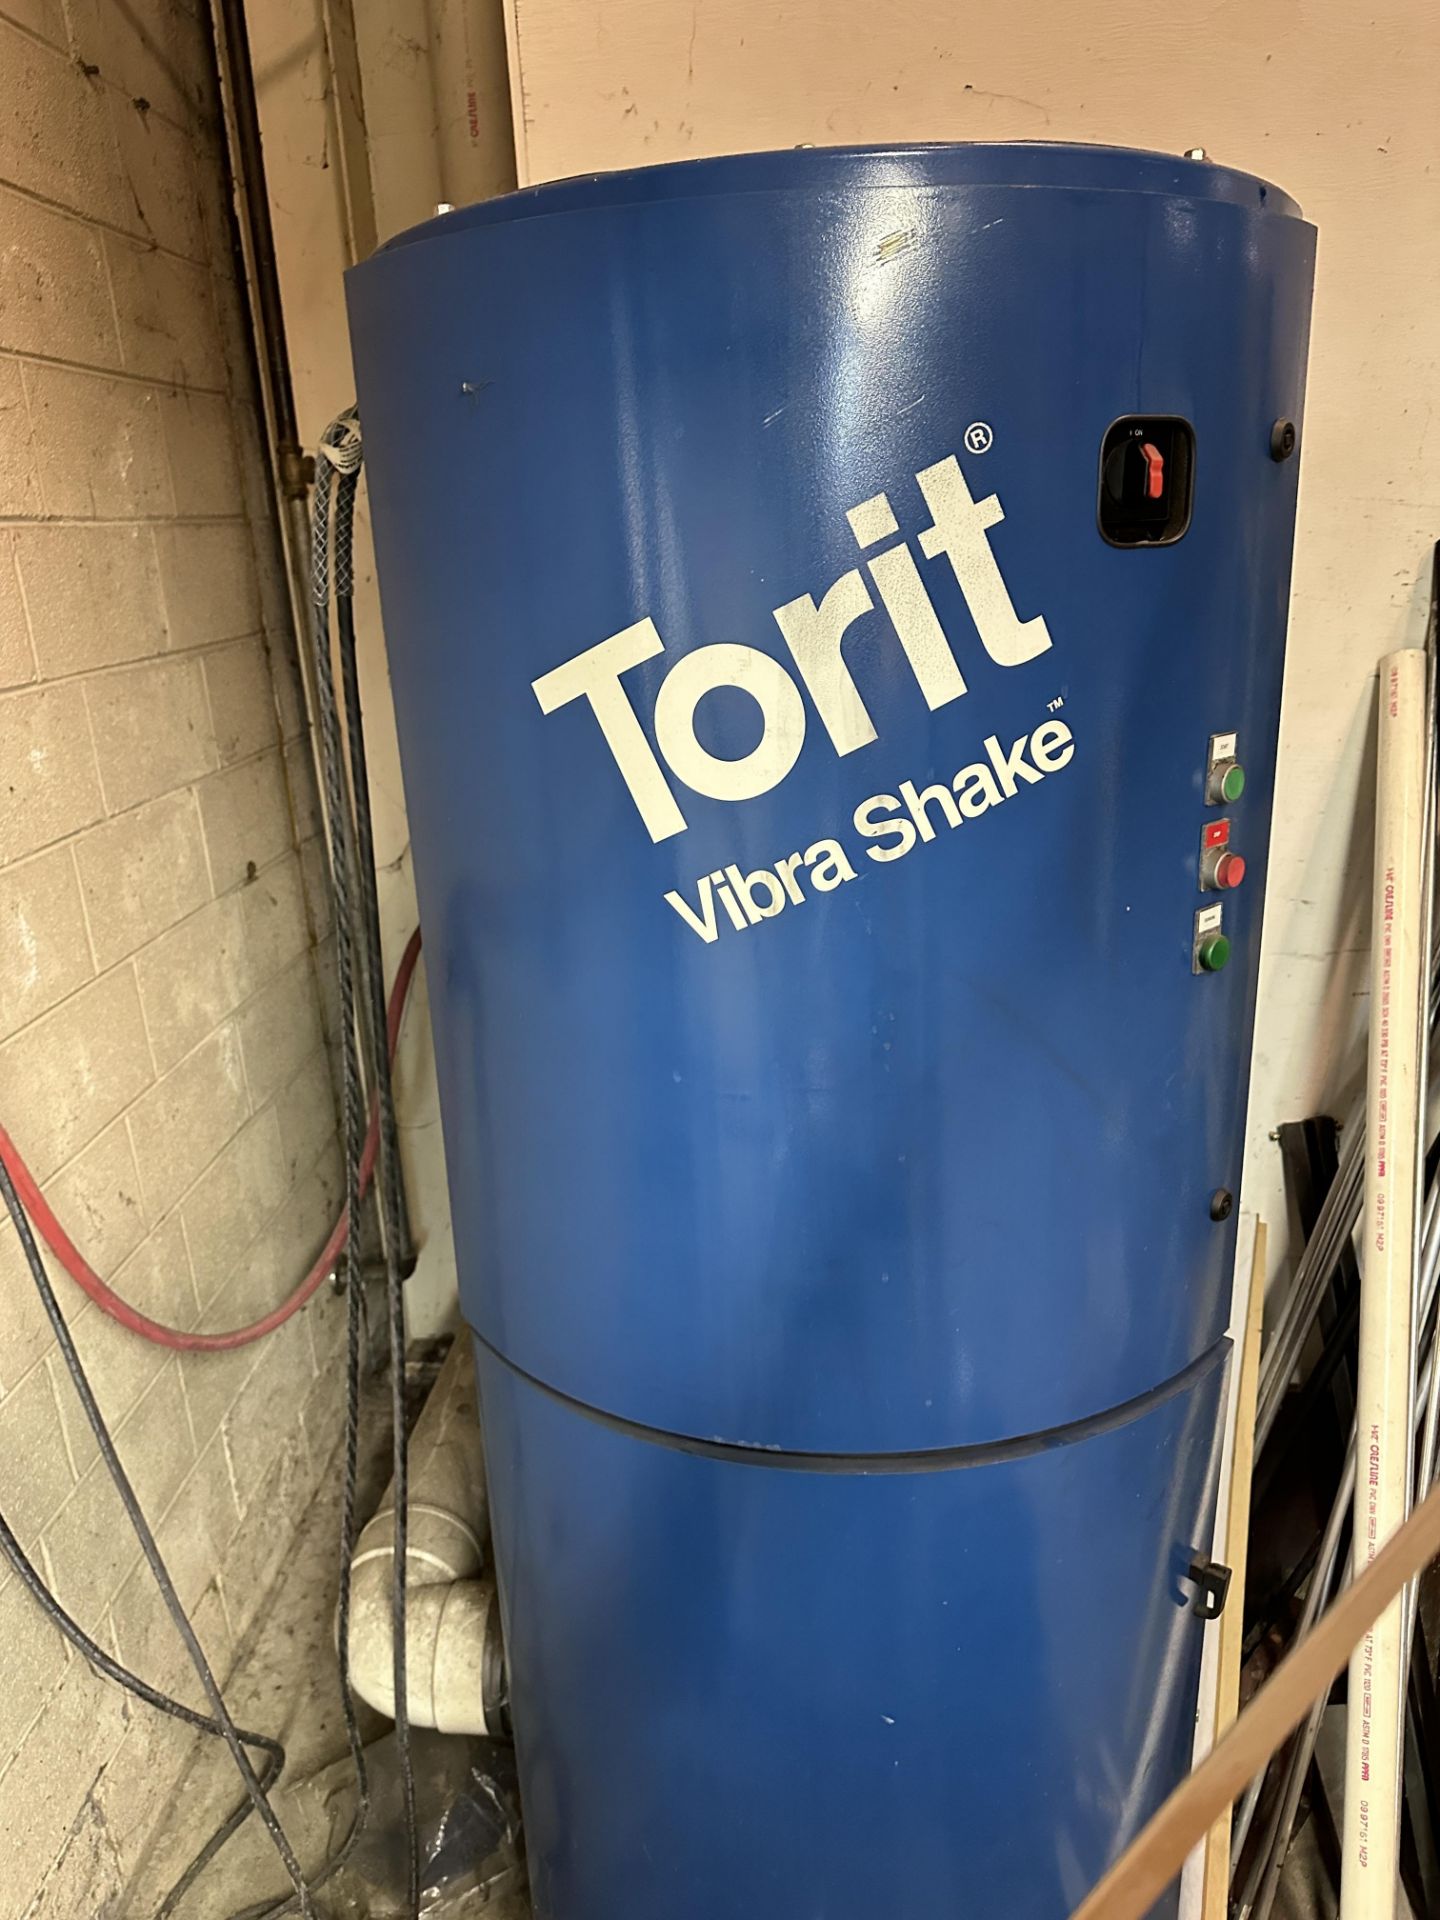 Torit RVS 15 Vibra Shake Dust Collector - Image 2 of 4